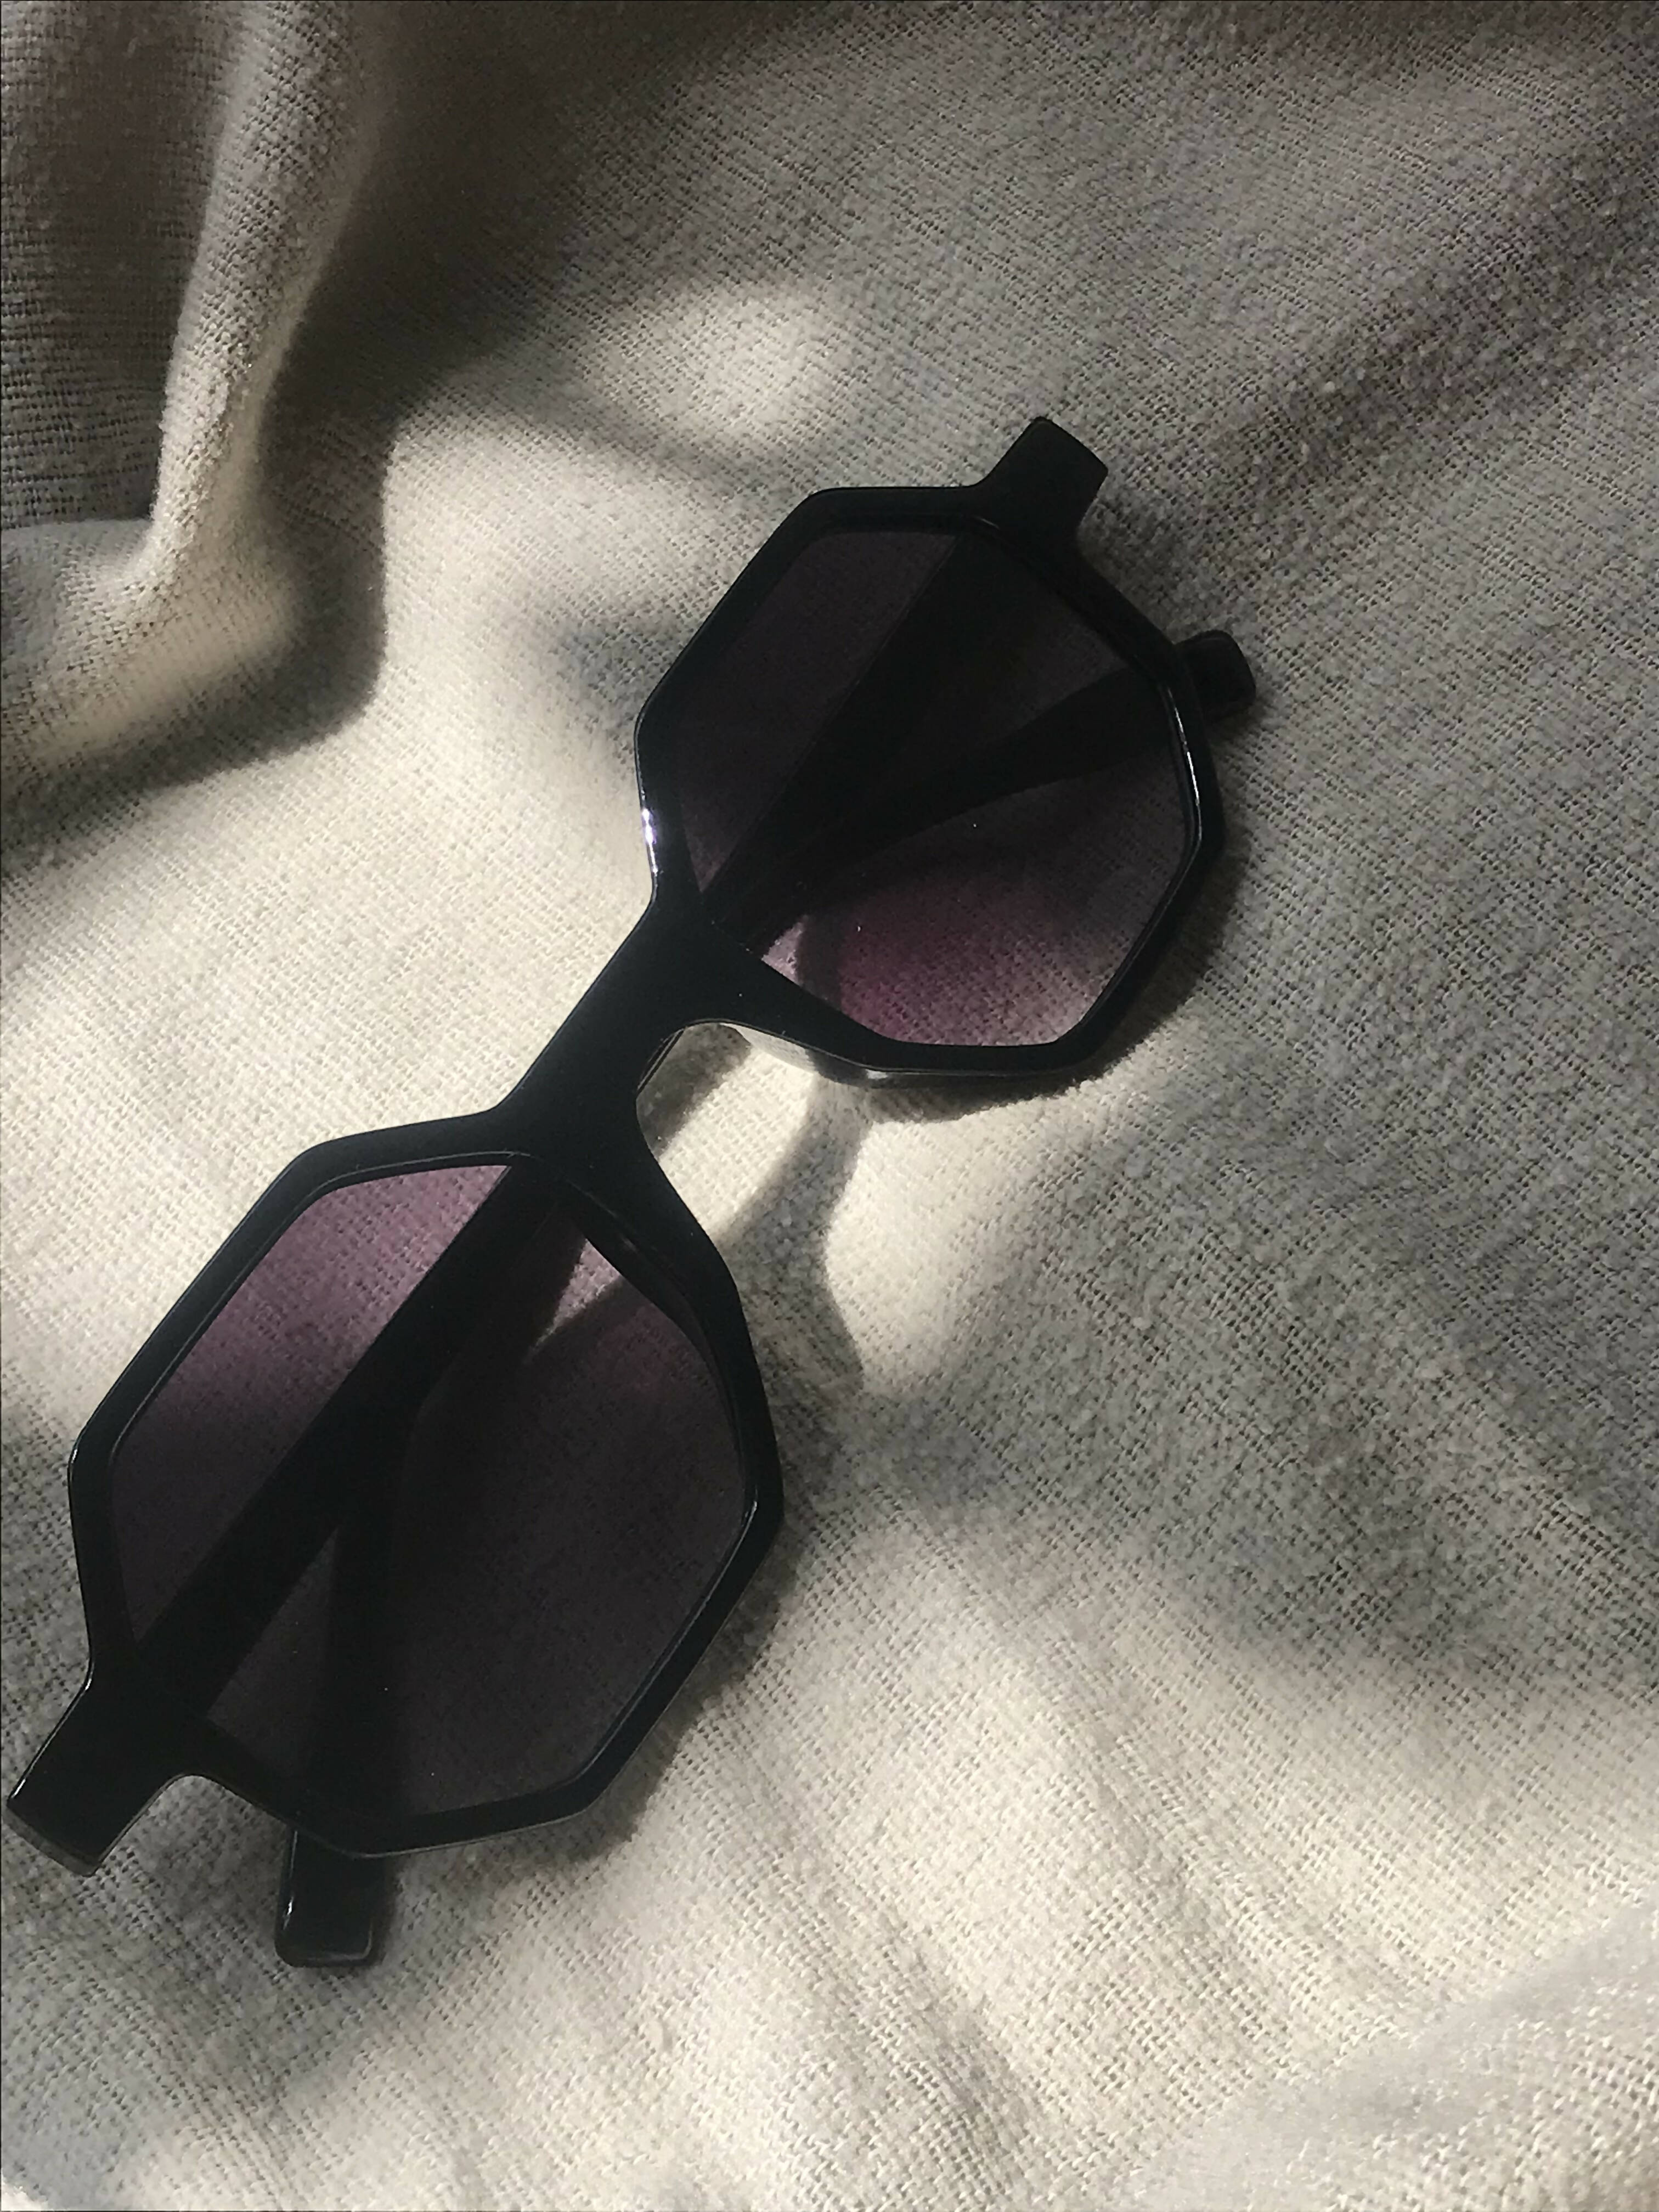 Black Shades | Elegant Sunglasses | Women Accessories | New